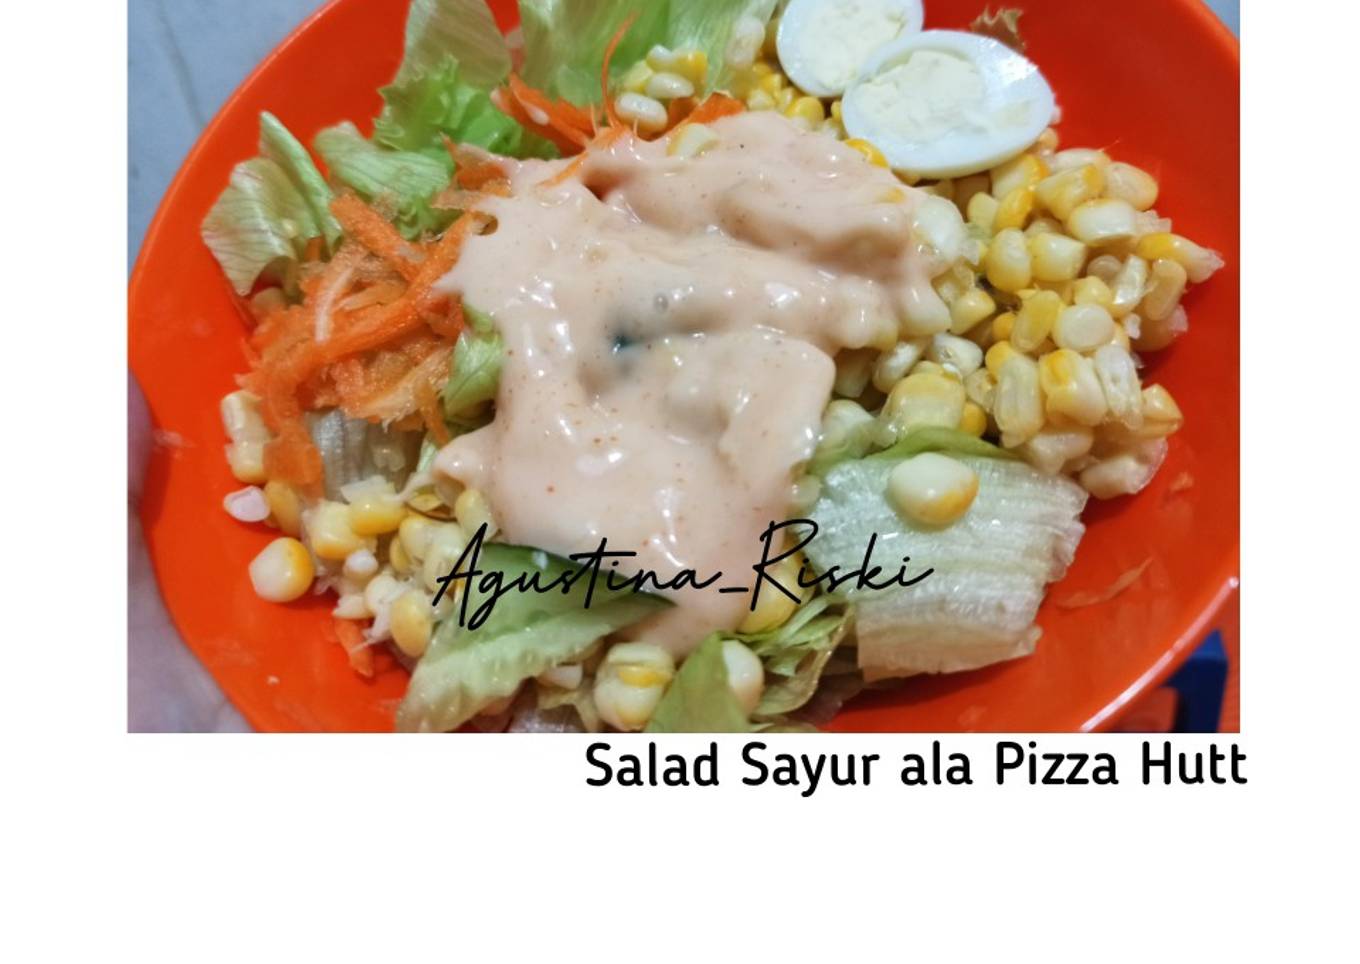 Salad Sayur ala Pizza Hut